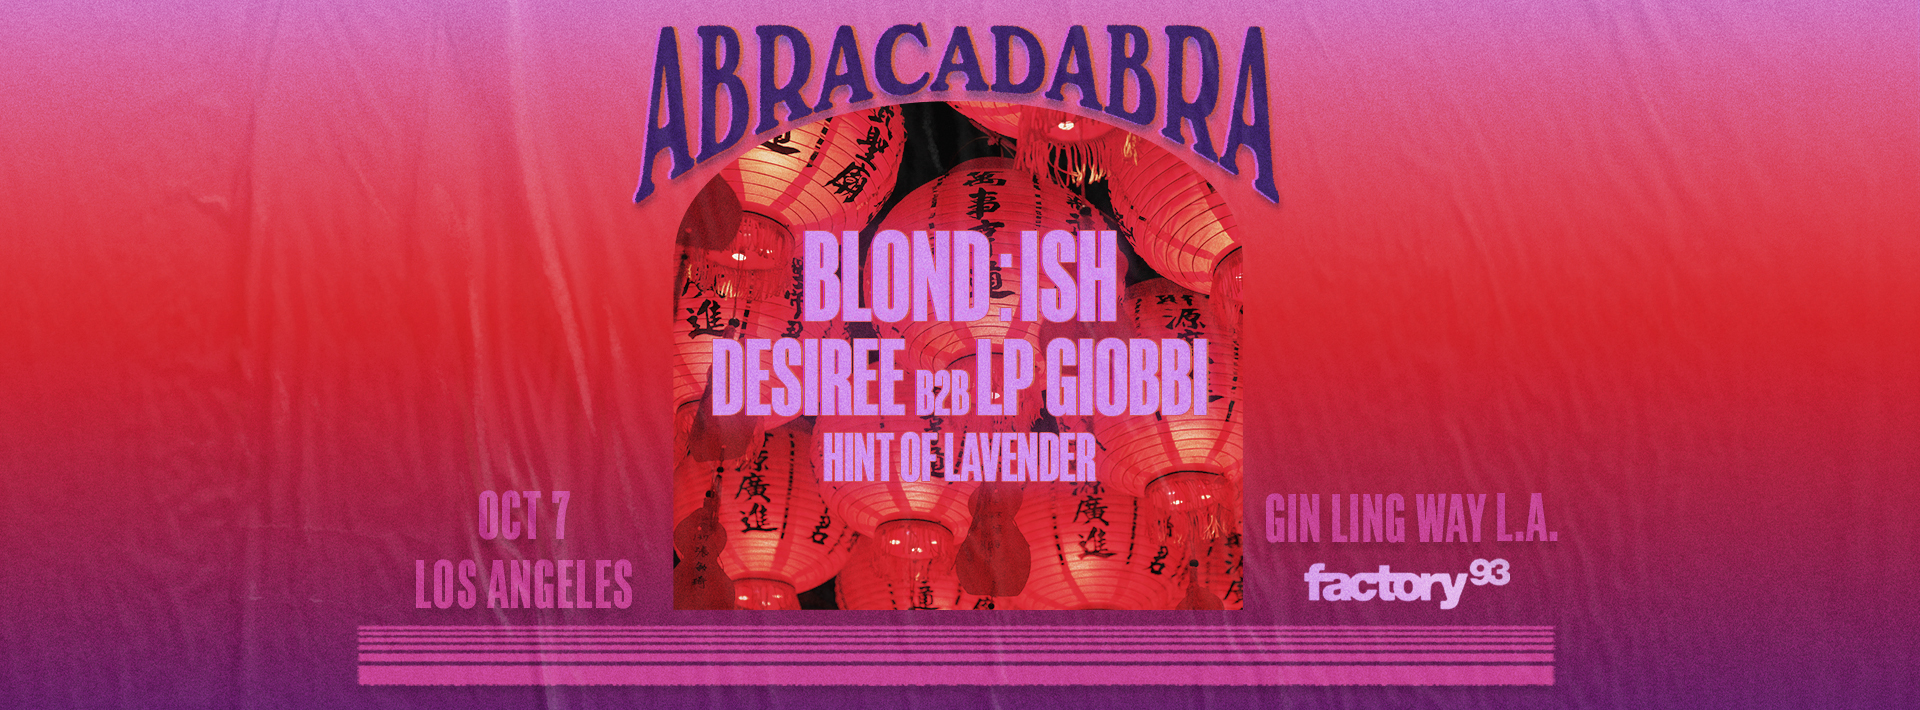 BLOND:ISH presents Abracadabra with DESIREE b2b LP Giobbi, Hint of Lavender